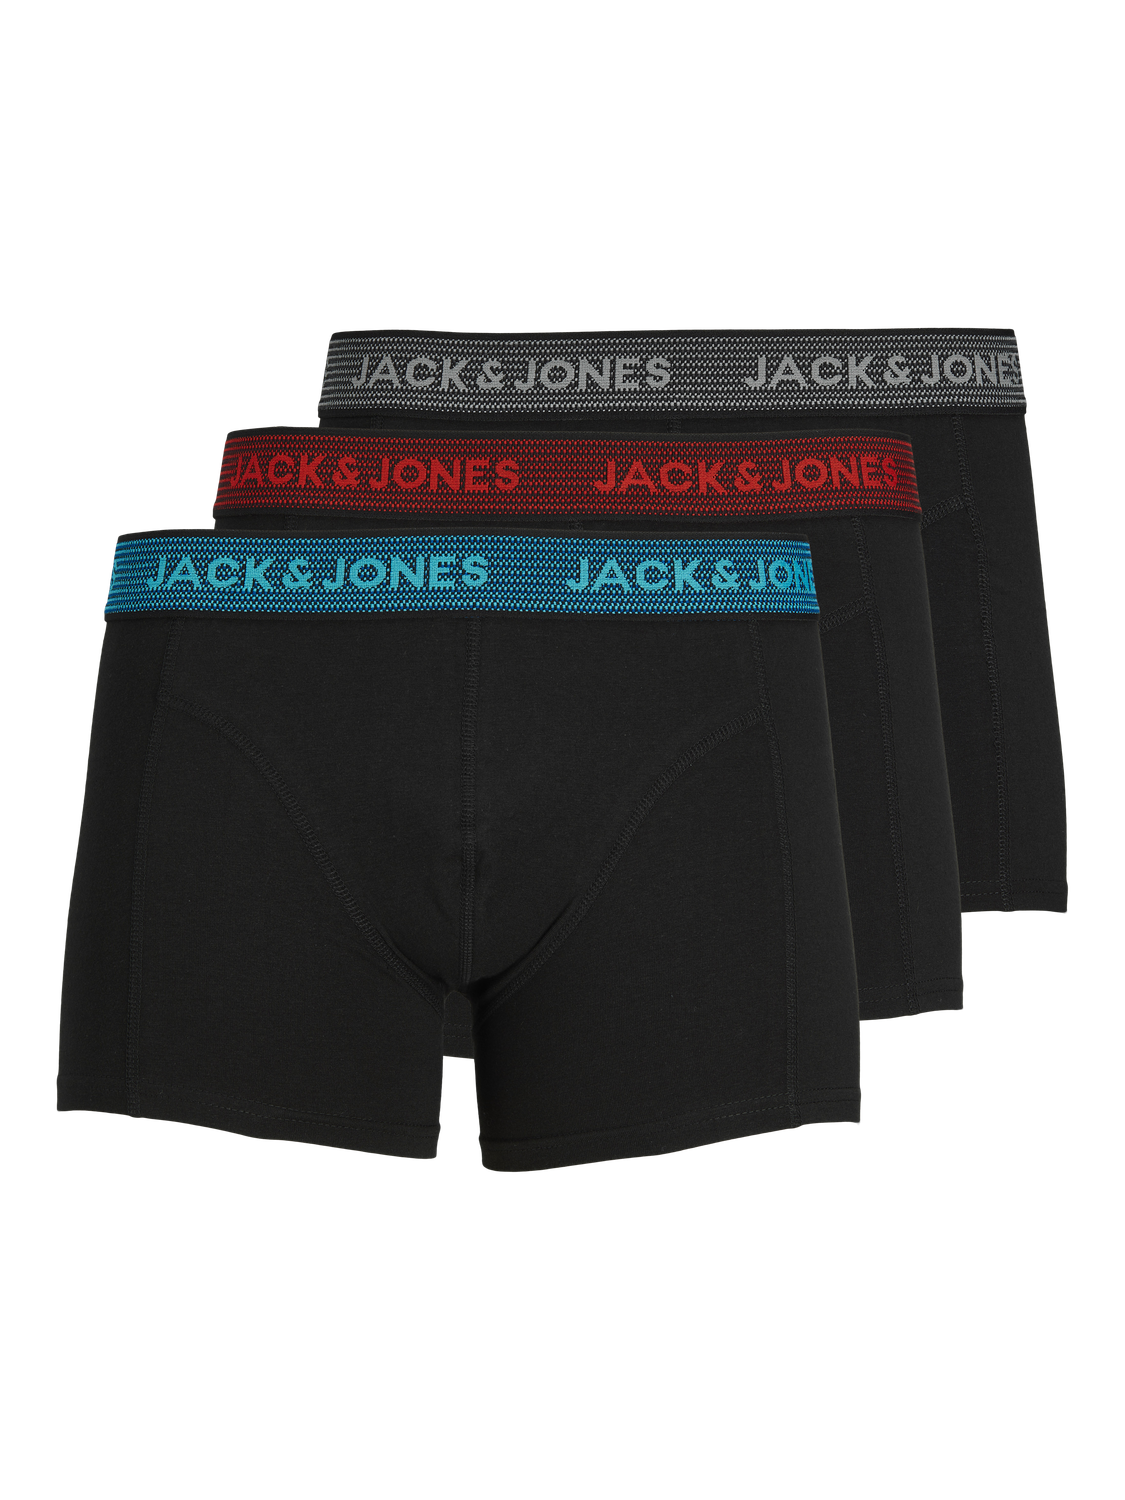 Jack & Jones Mens New 3 Pack Trunks Boxer Shorts Underwear Black Blue ...